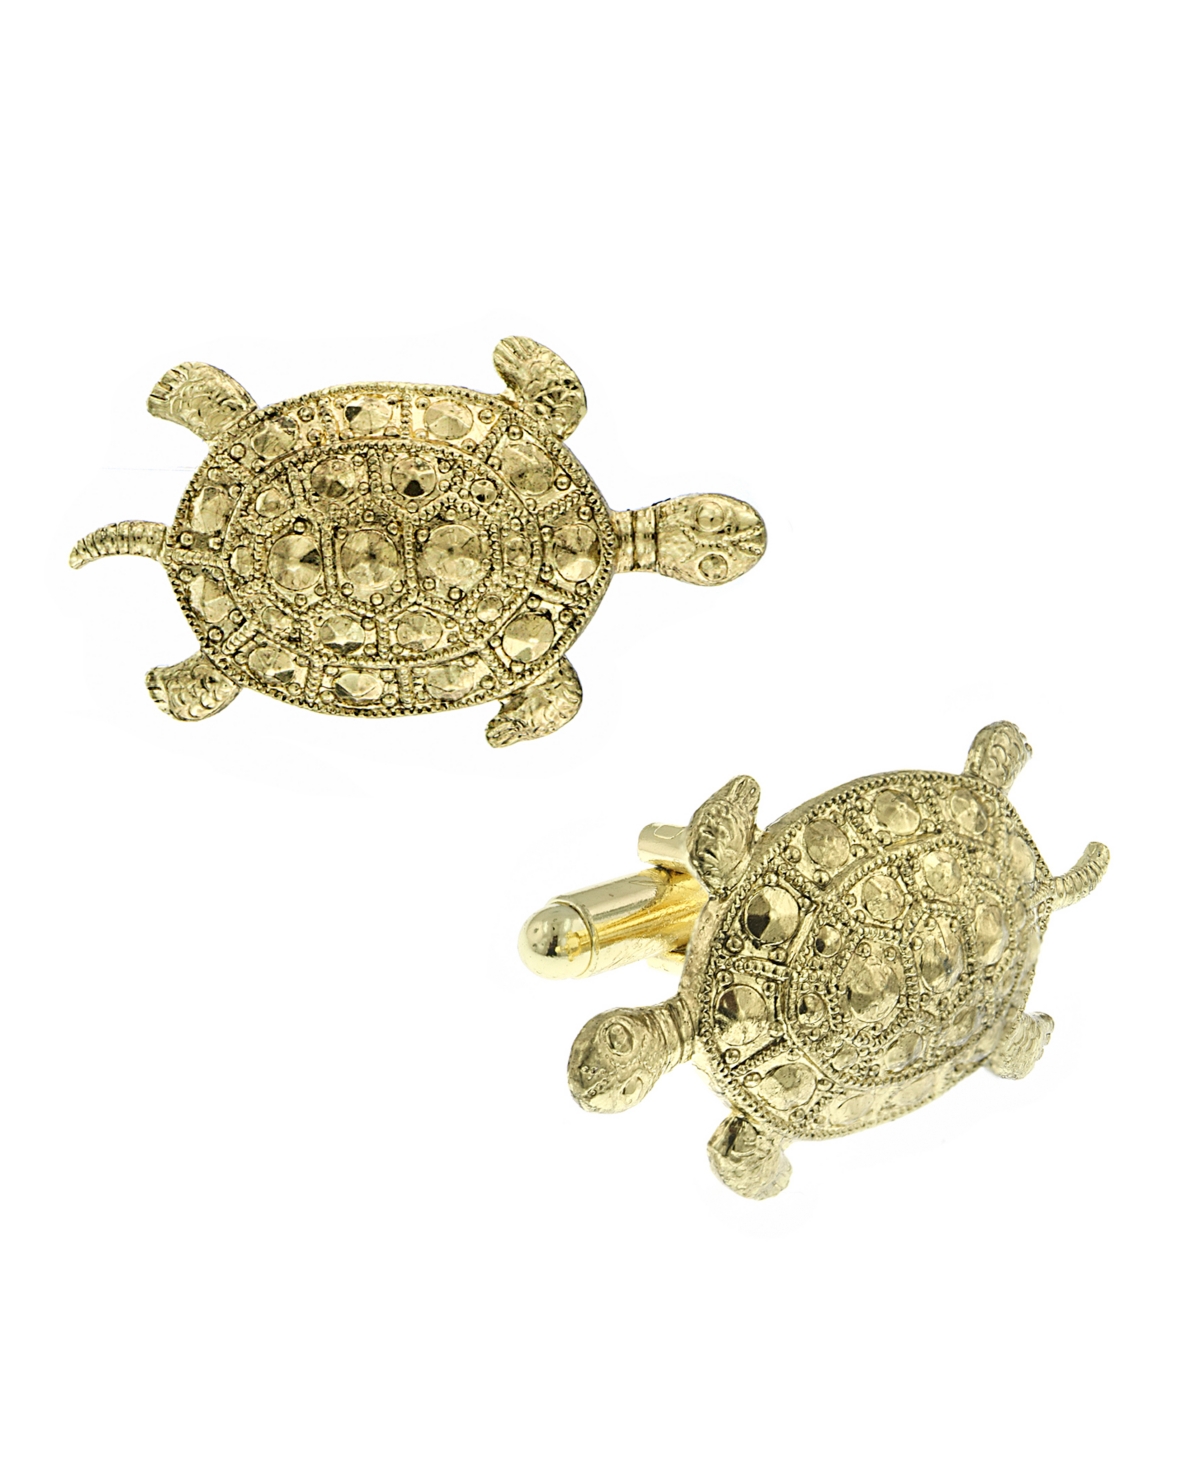 1928 Jewelry 14k Gold Plated Turtle Cufflinks